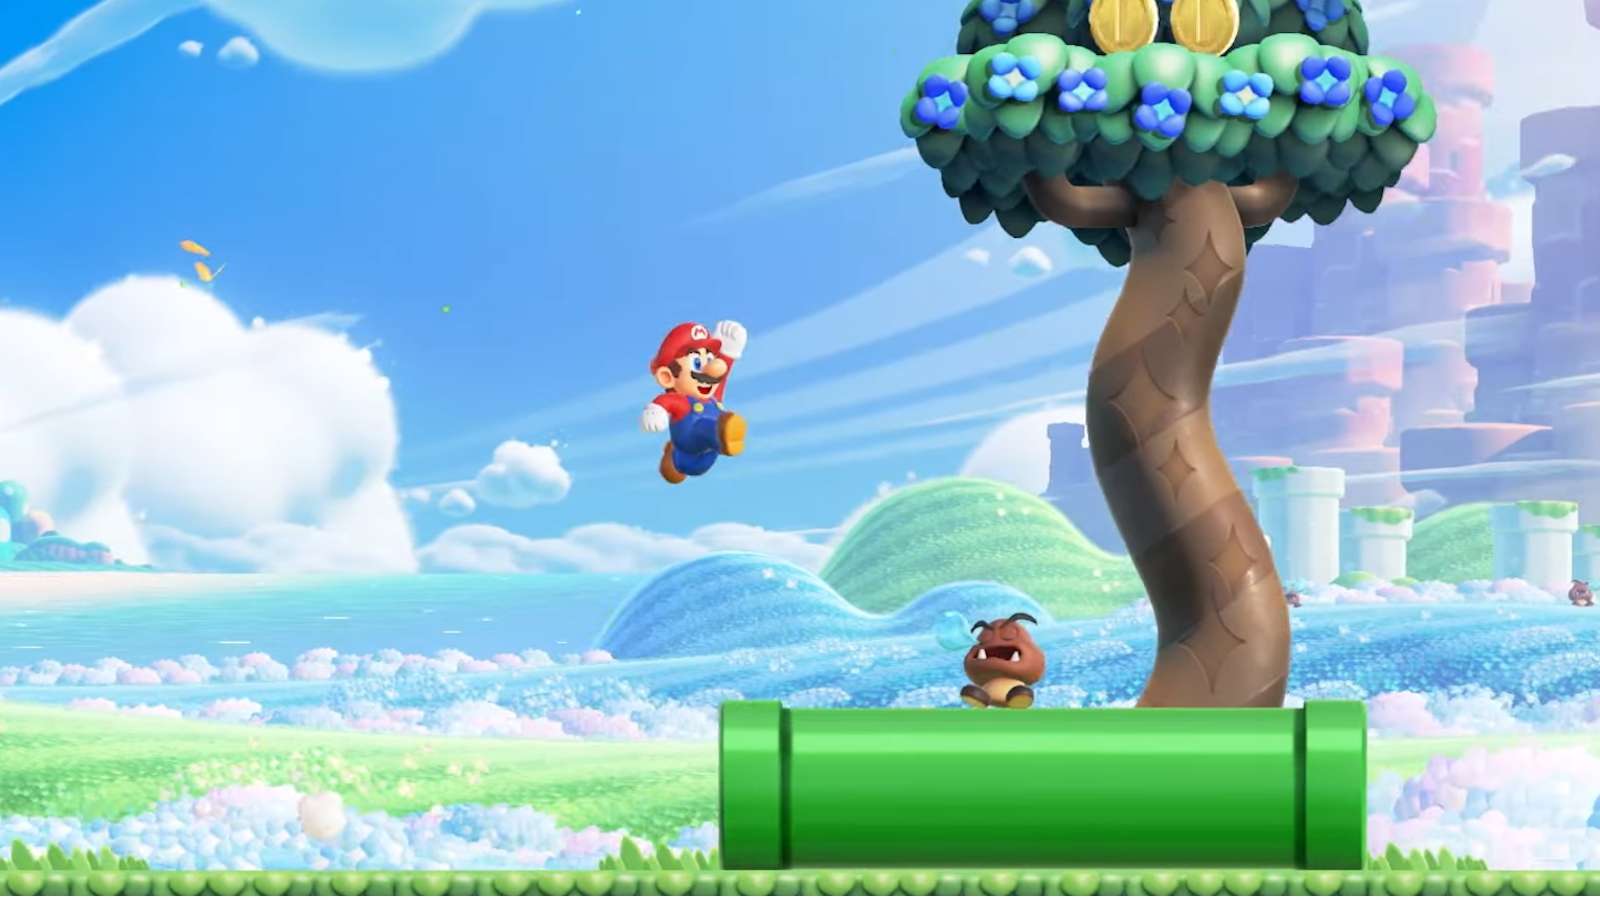 Super Mario Bros. Wonder gameplay as revealed in Nintendo Direct announcement trailer.